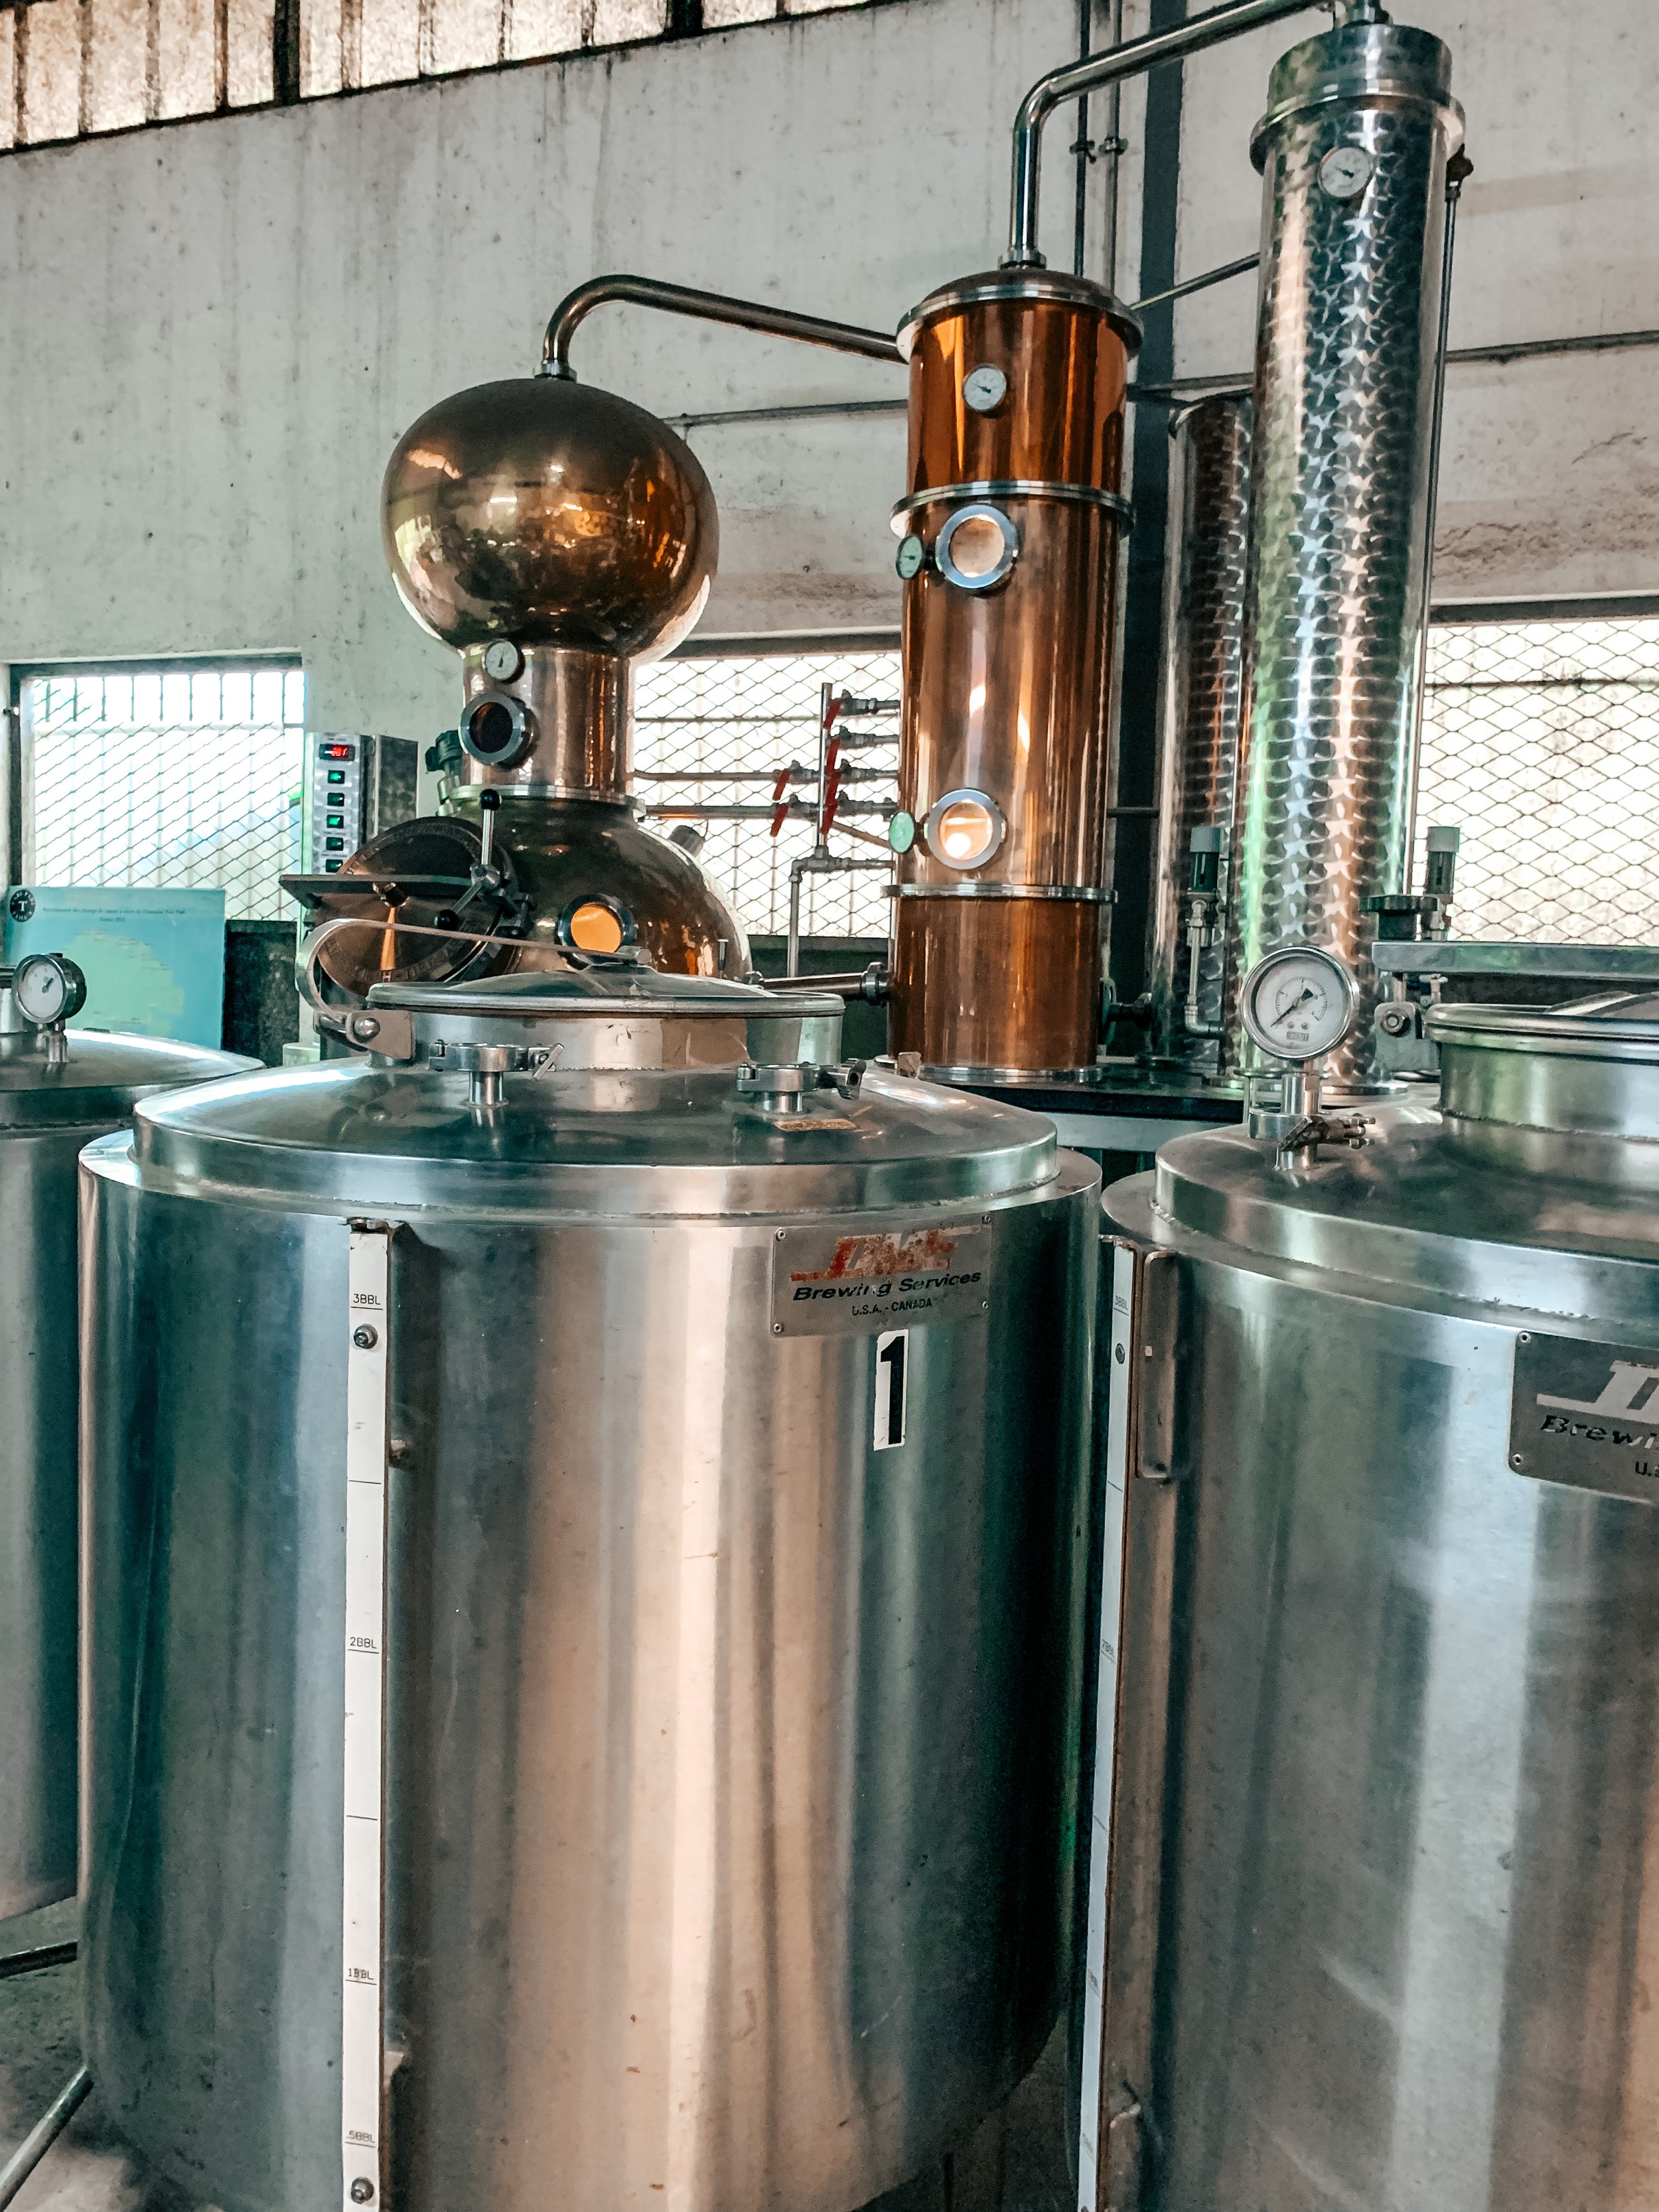 Distillerie de Taha’a where they serve Domaine Pari Pari